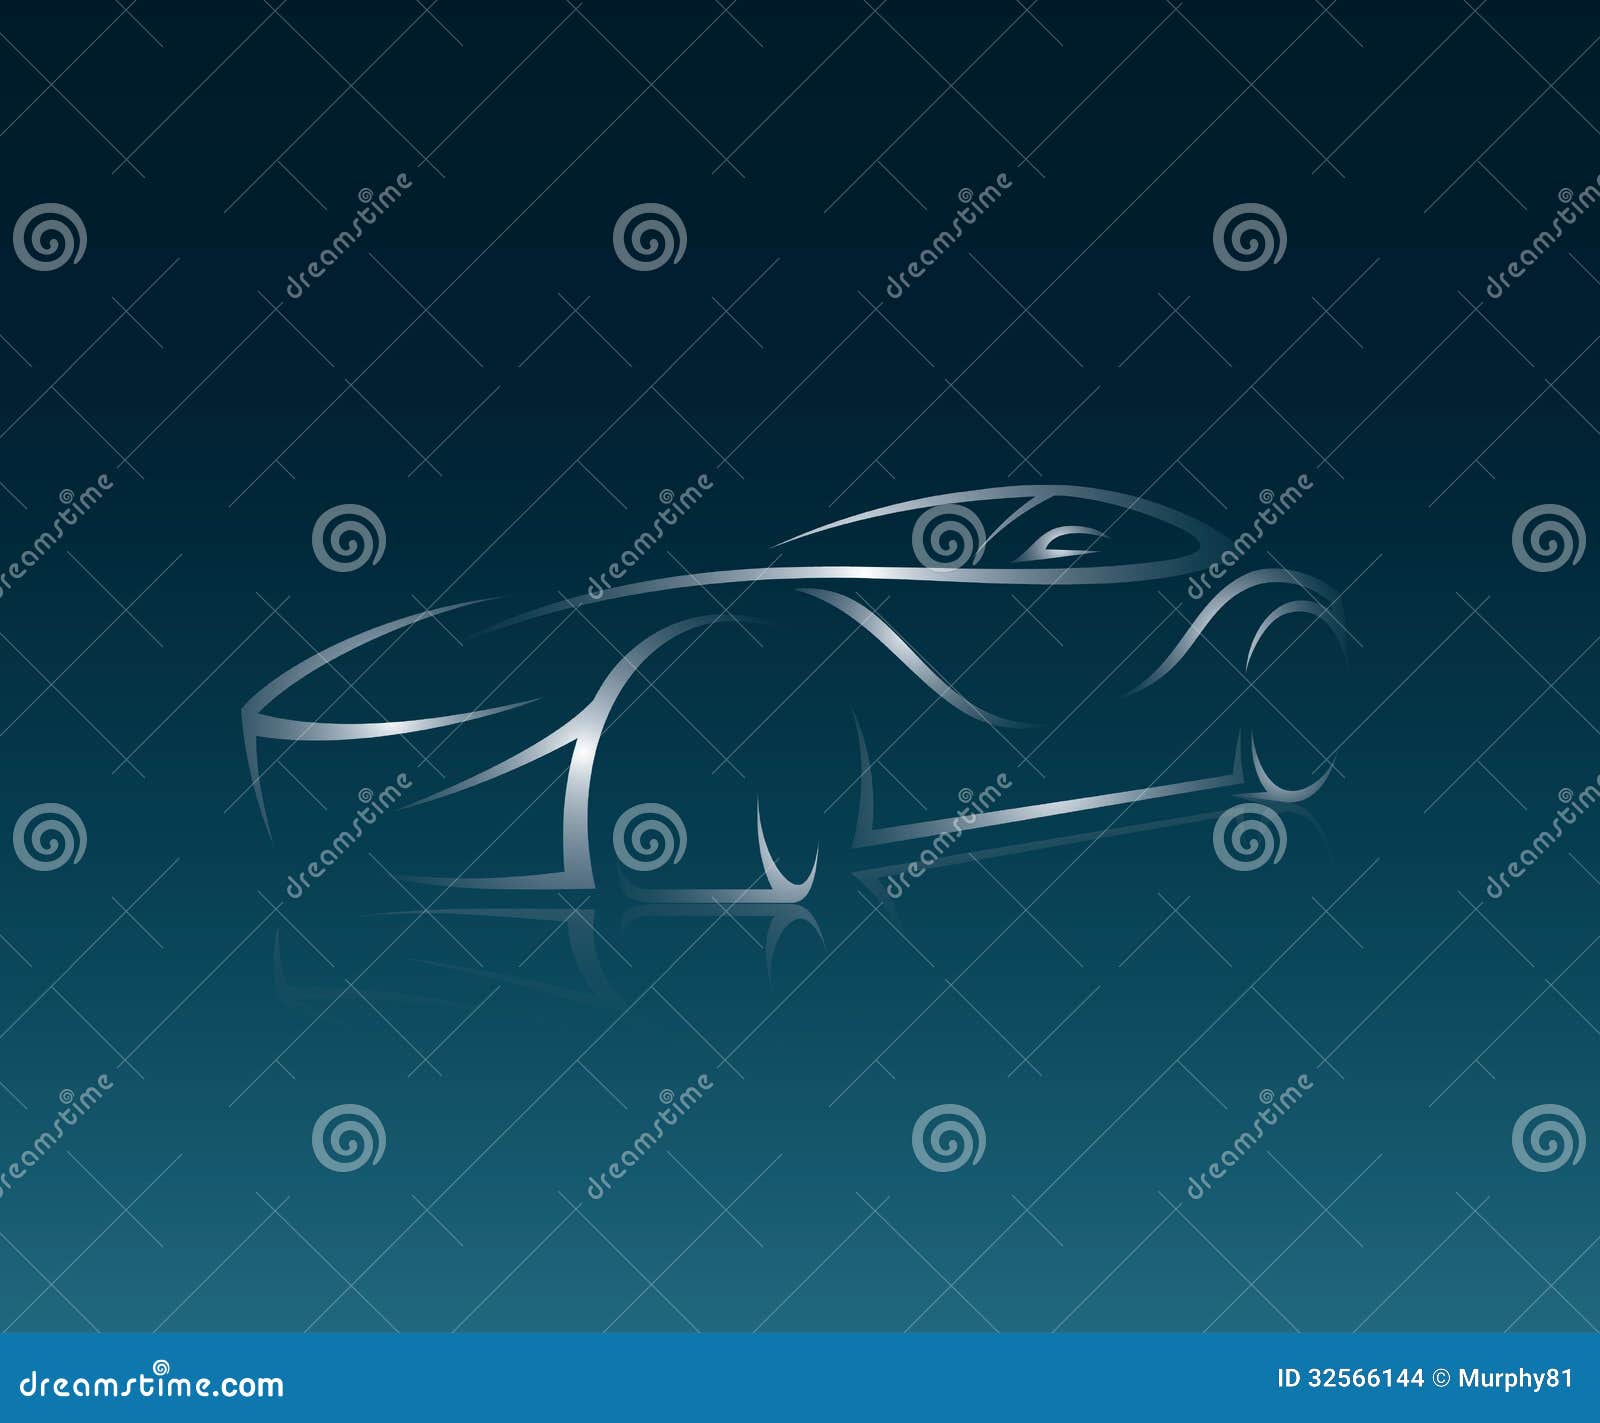 Abstract car illustration stock vector. Illustration of advertising ...